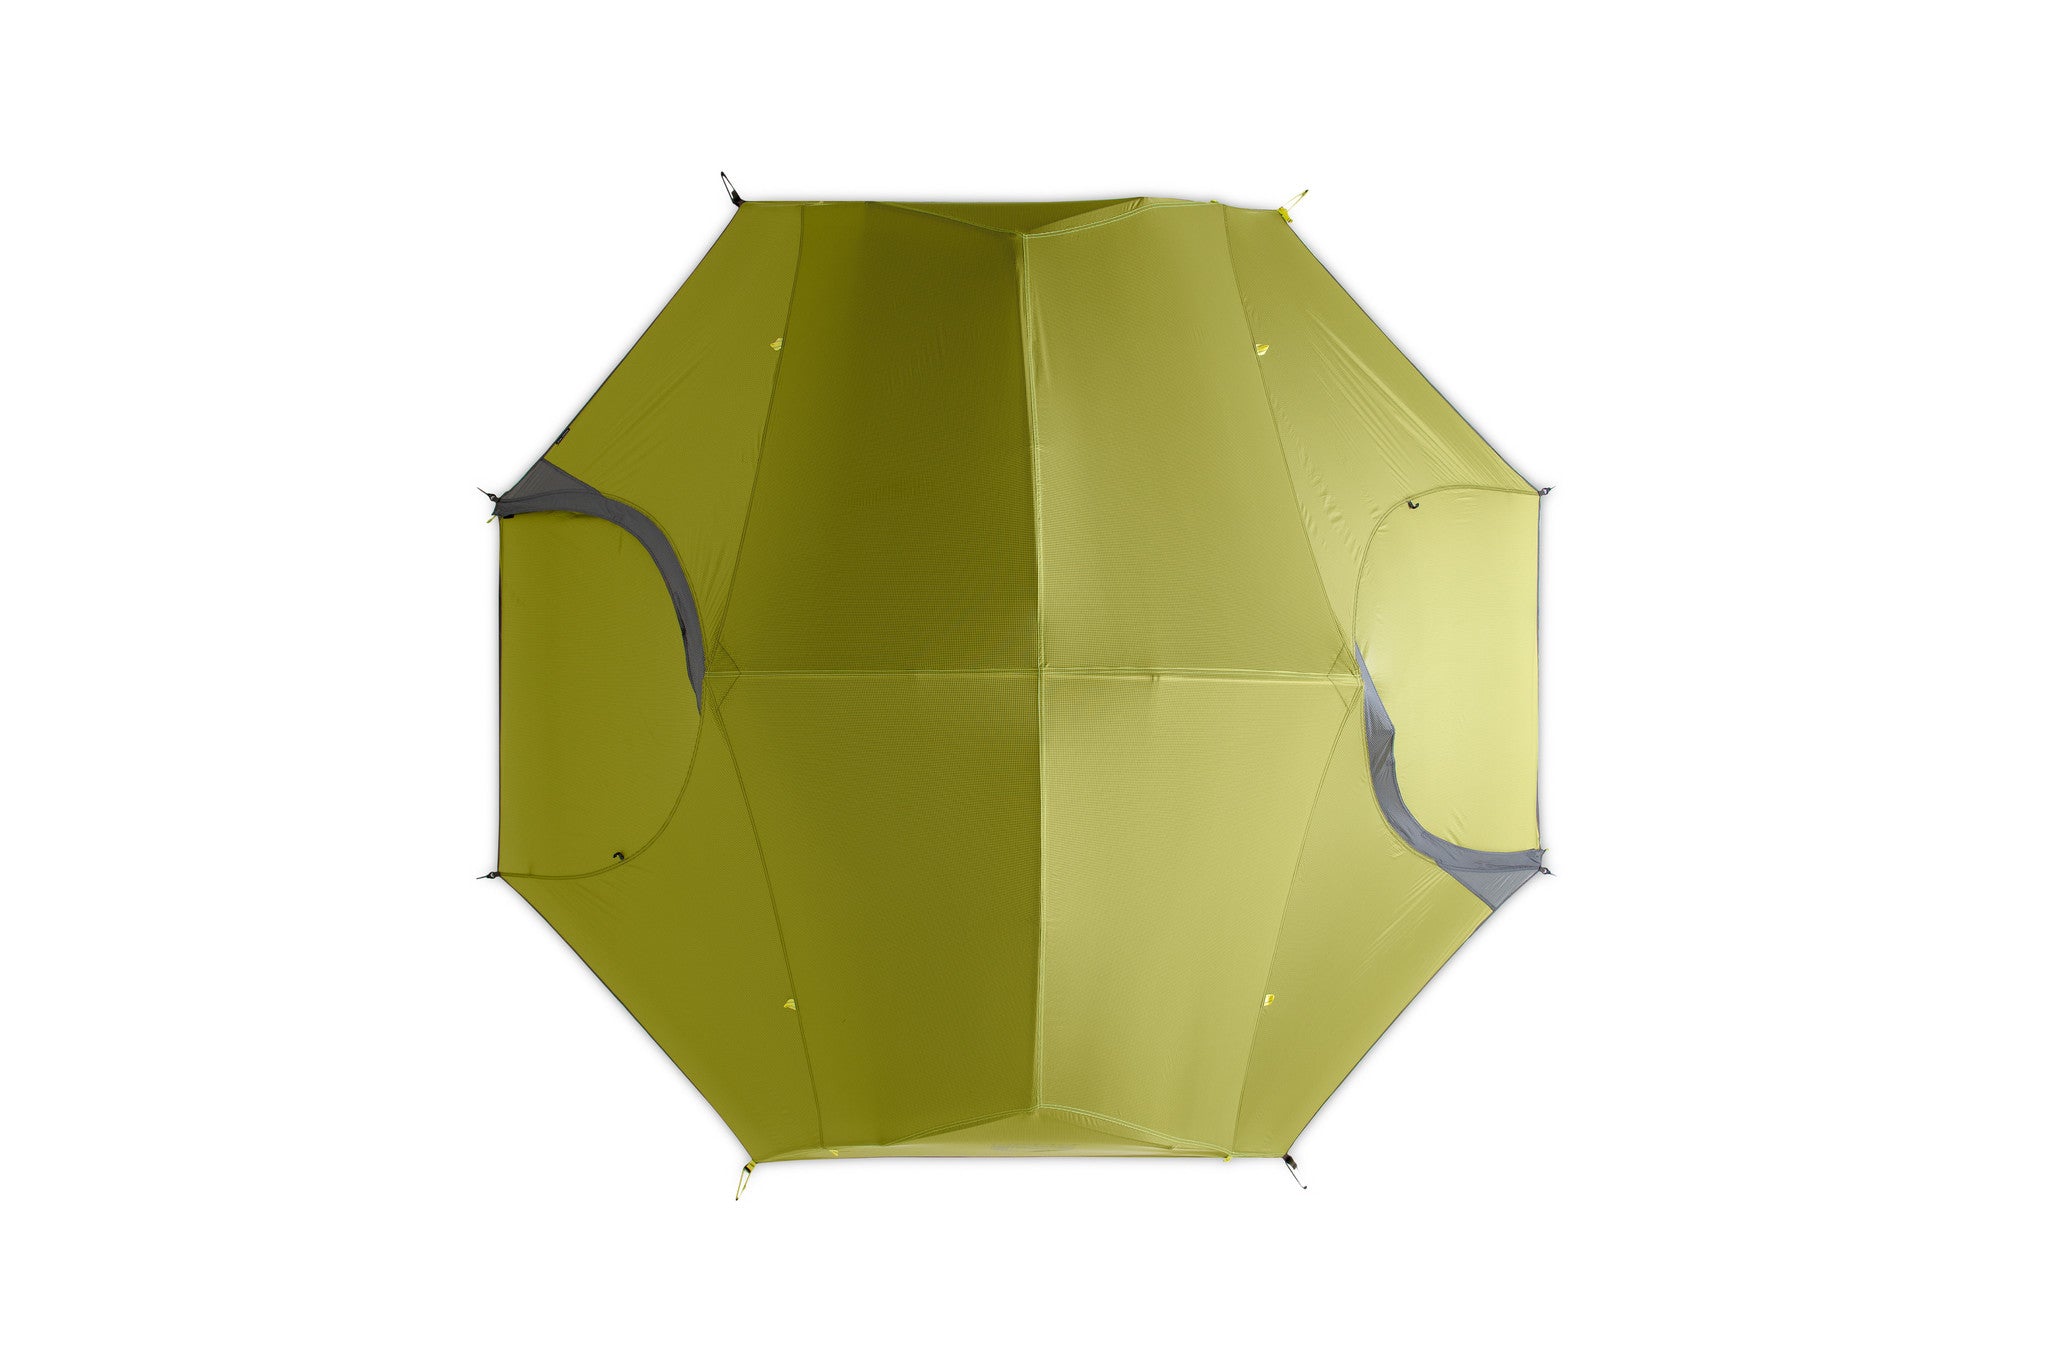 Nemo - Dagger OSMO 2P Lightweight Backpacking Tent